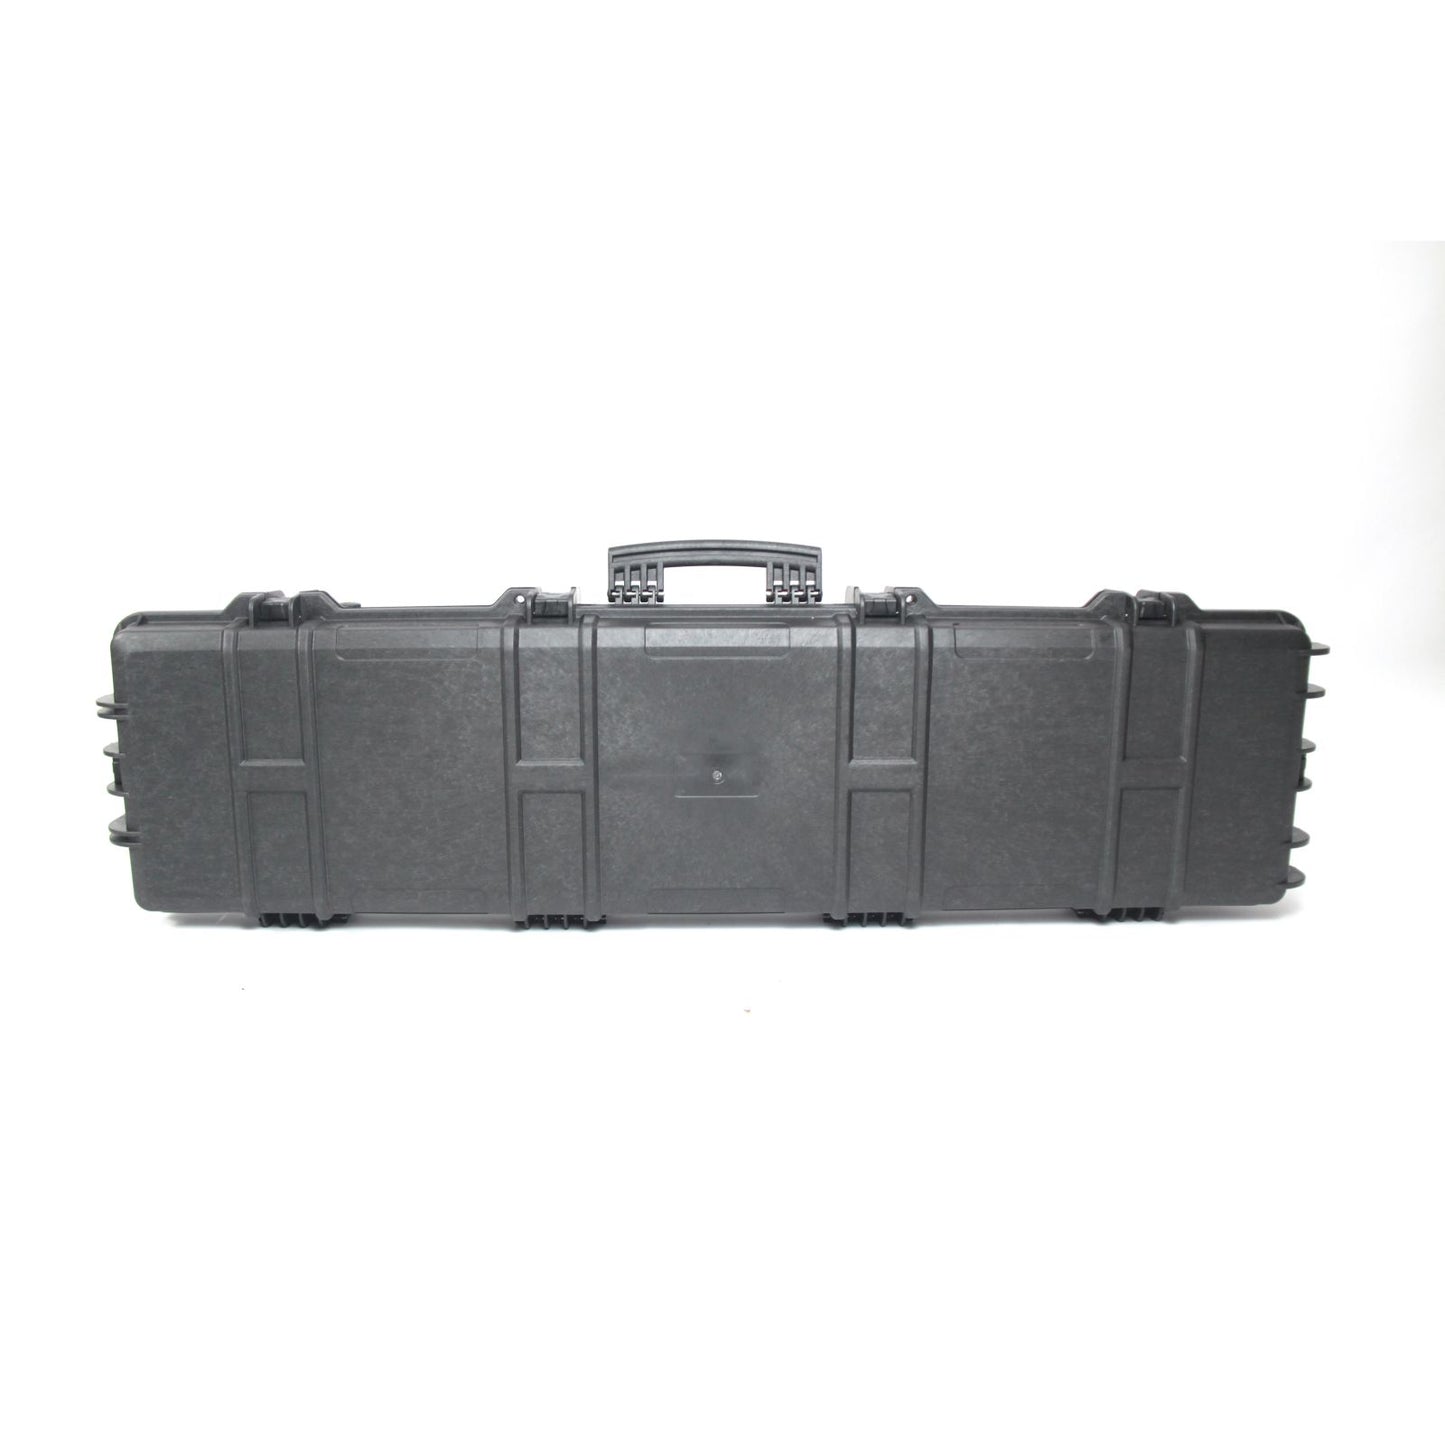 Army Gun Case Plastic Military Waterproof Box Rifle Gun Case